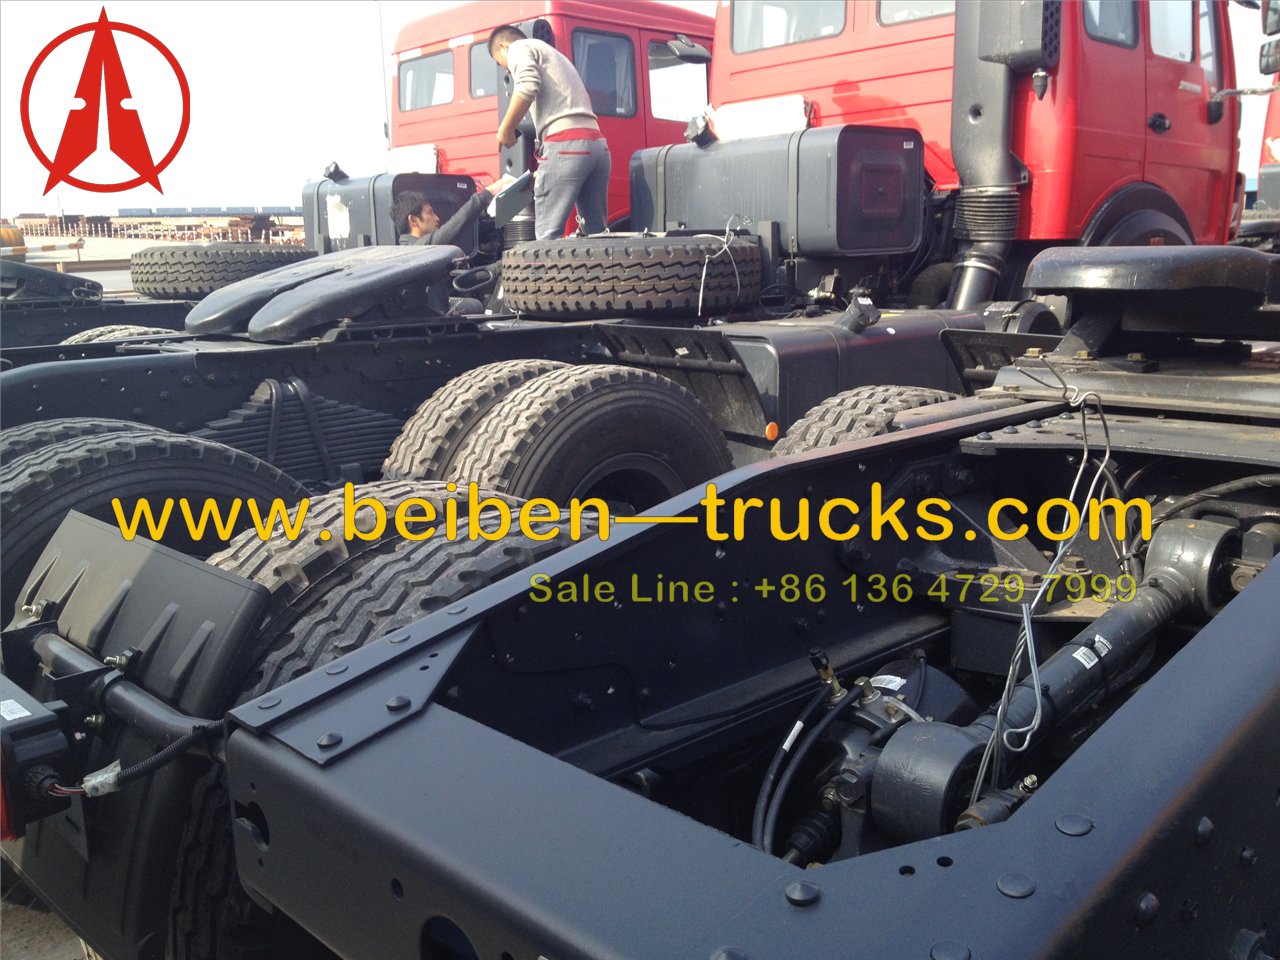 proveedor de camión tractor beiben 2638 de angola